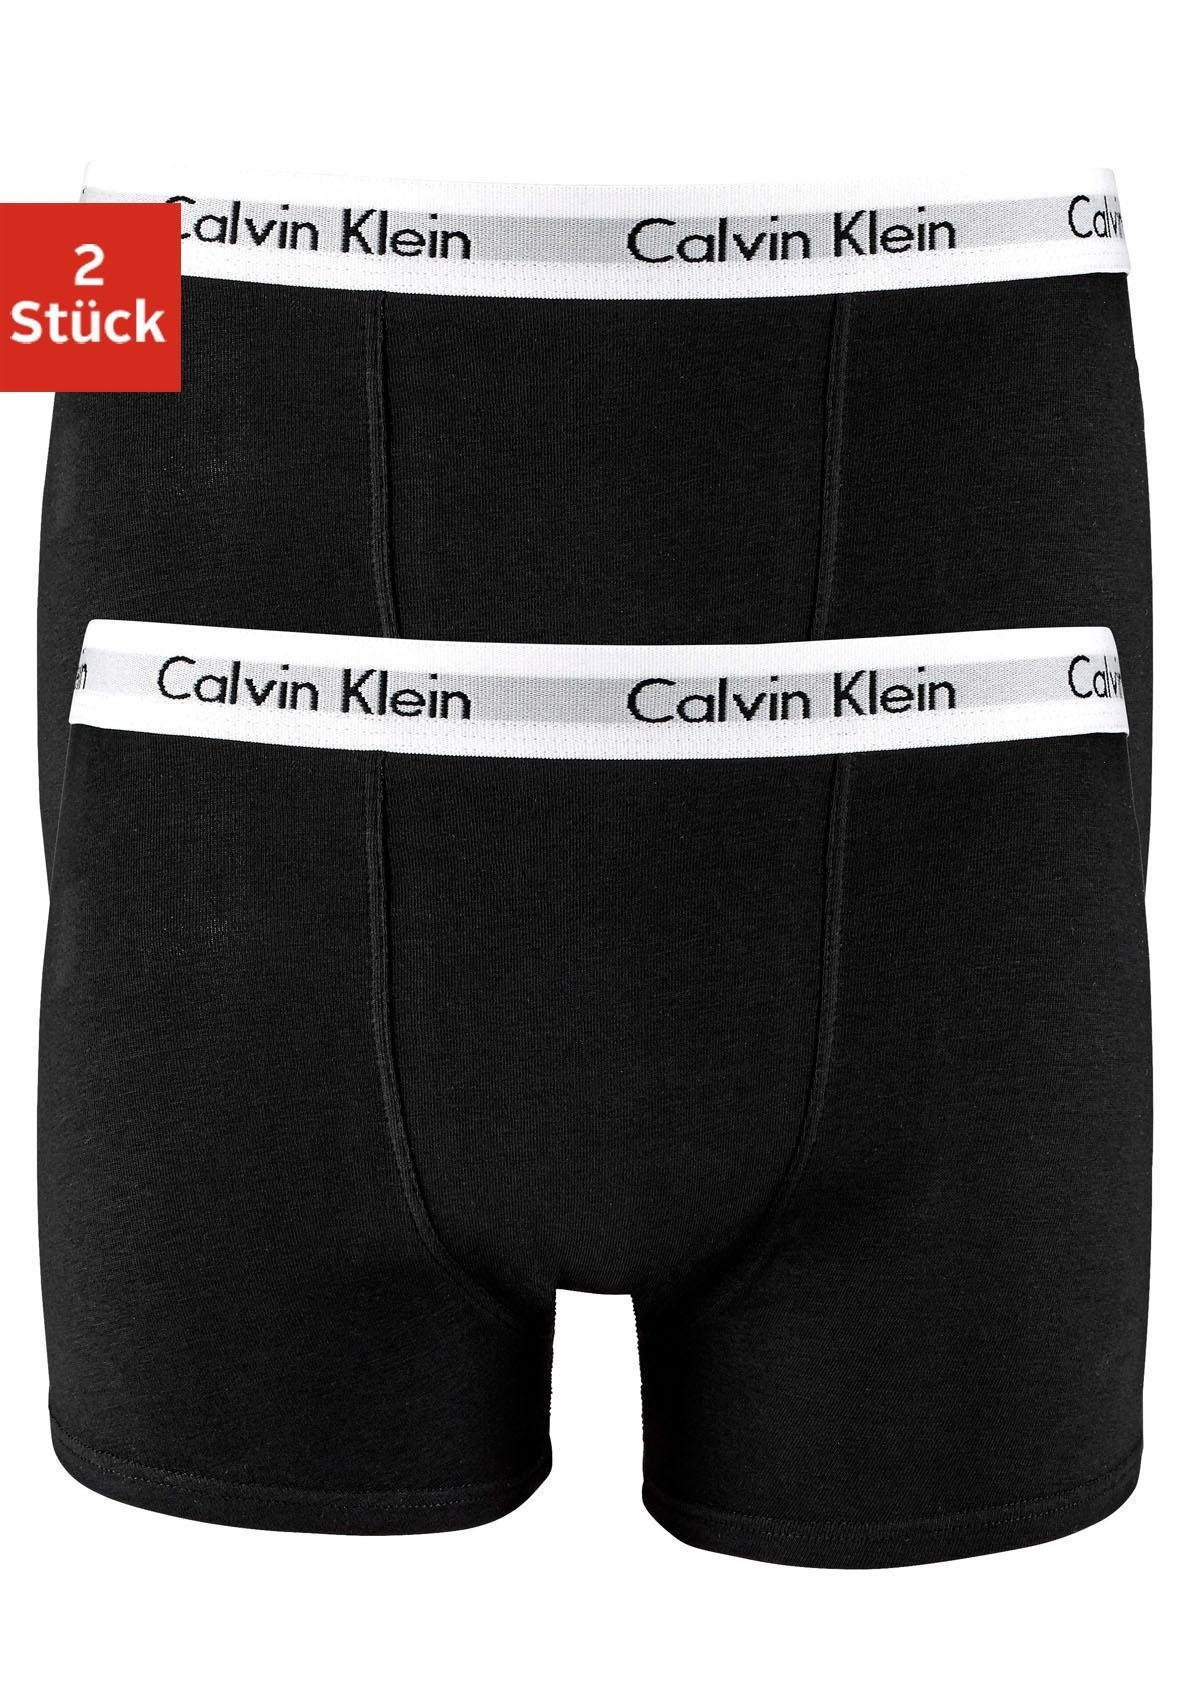 calvin klein boxershort (set, 2 stuks) zwart